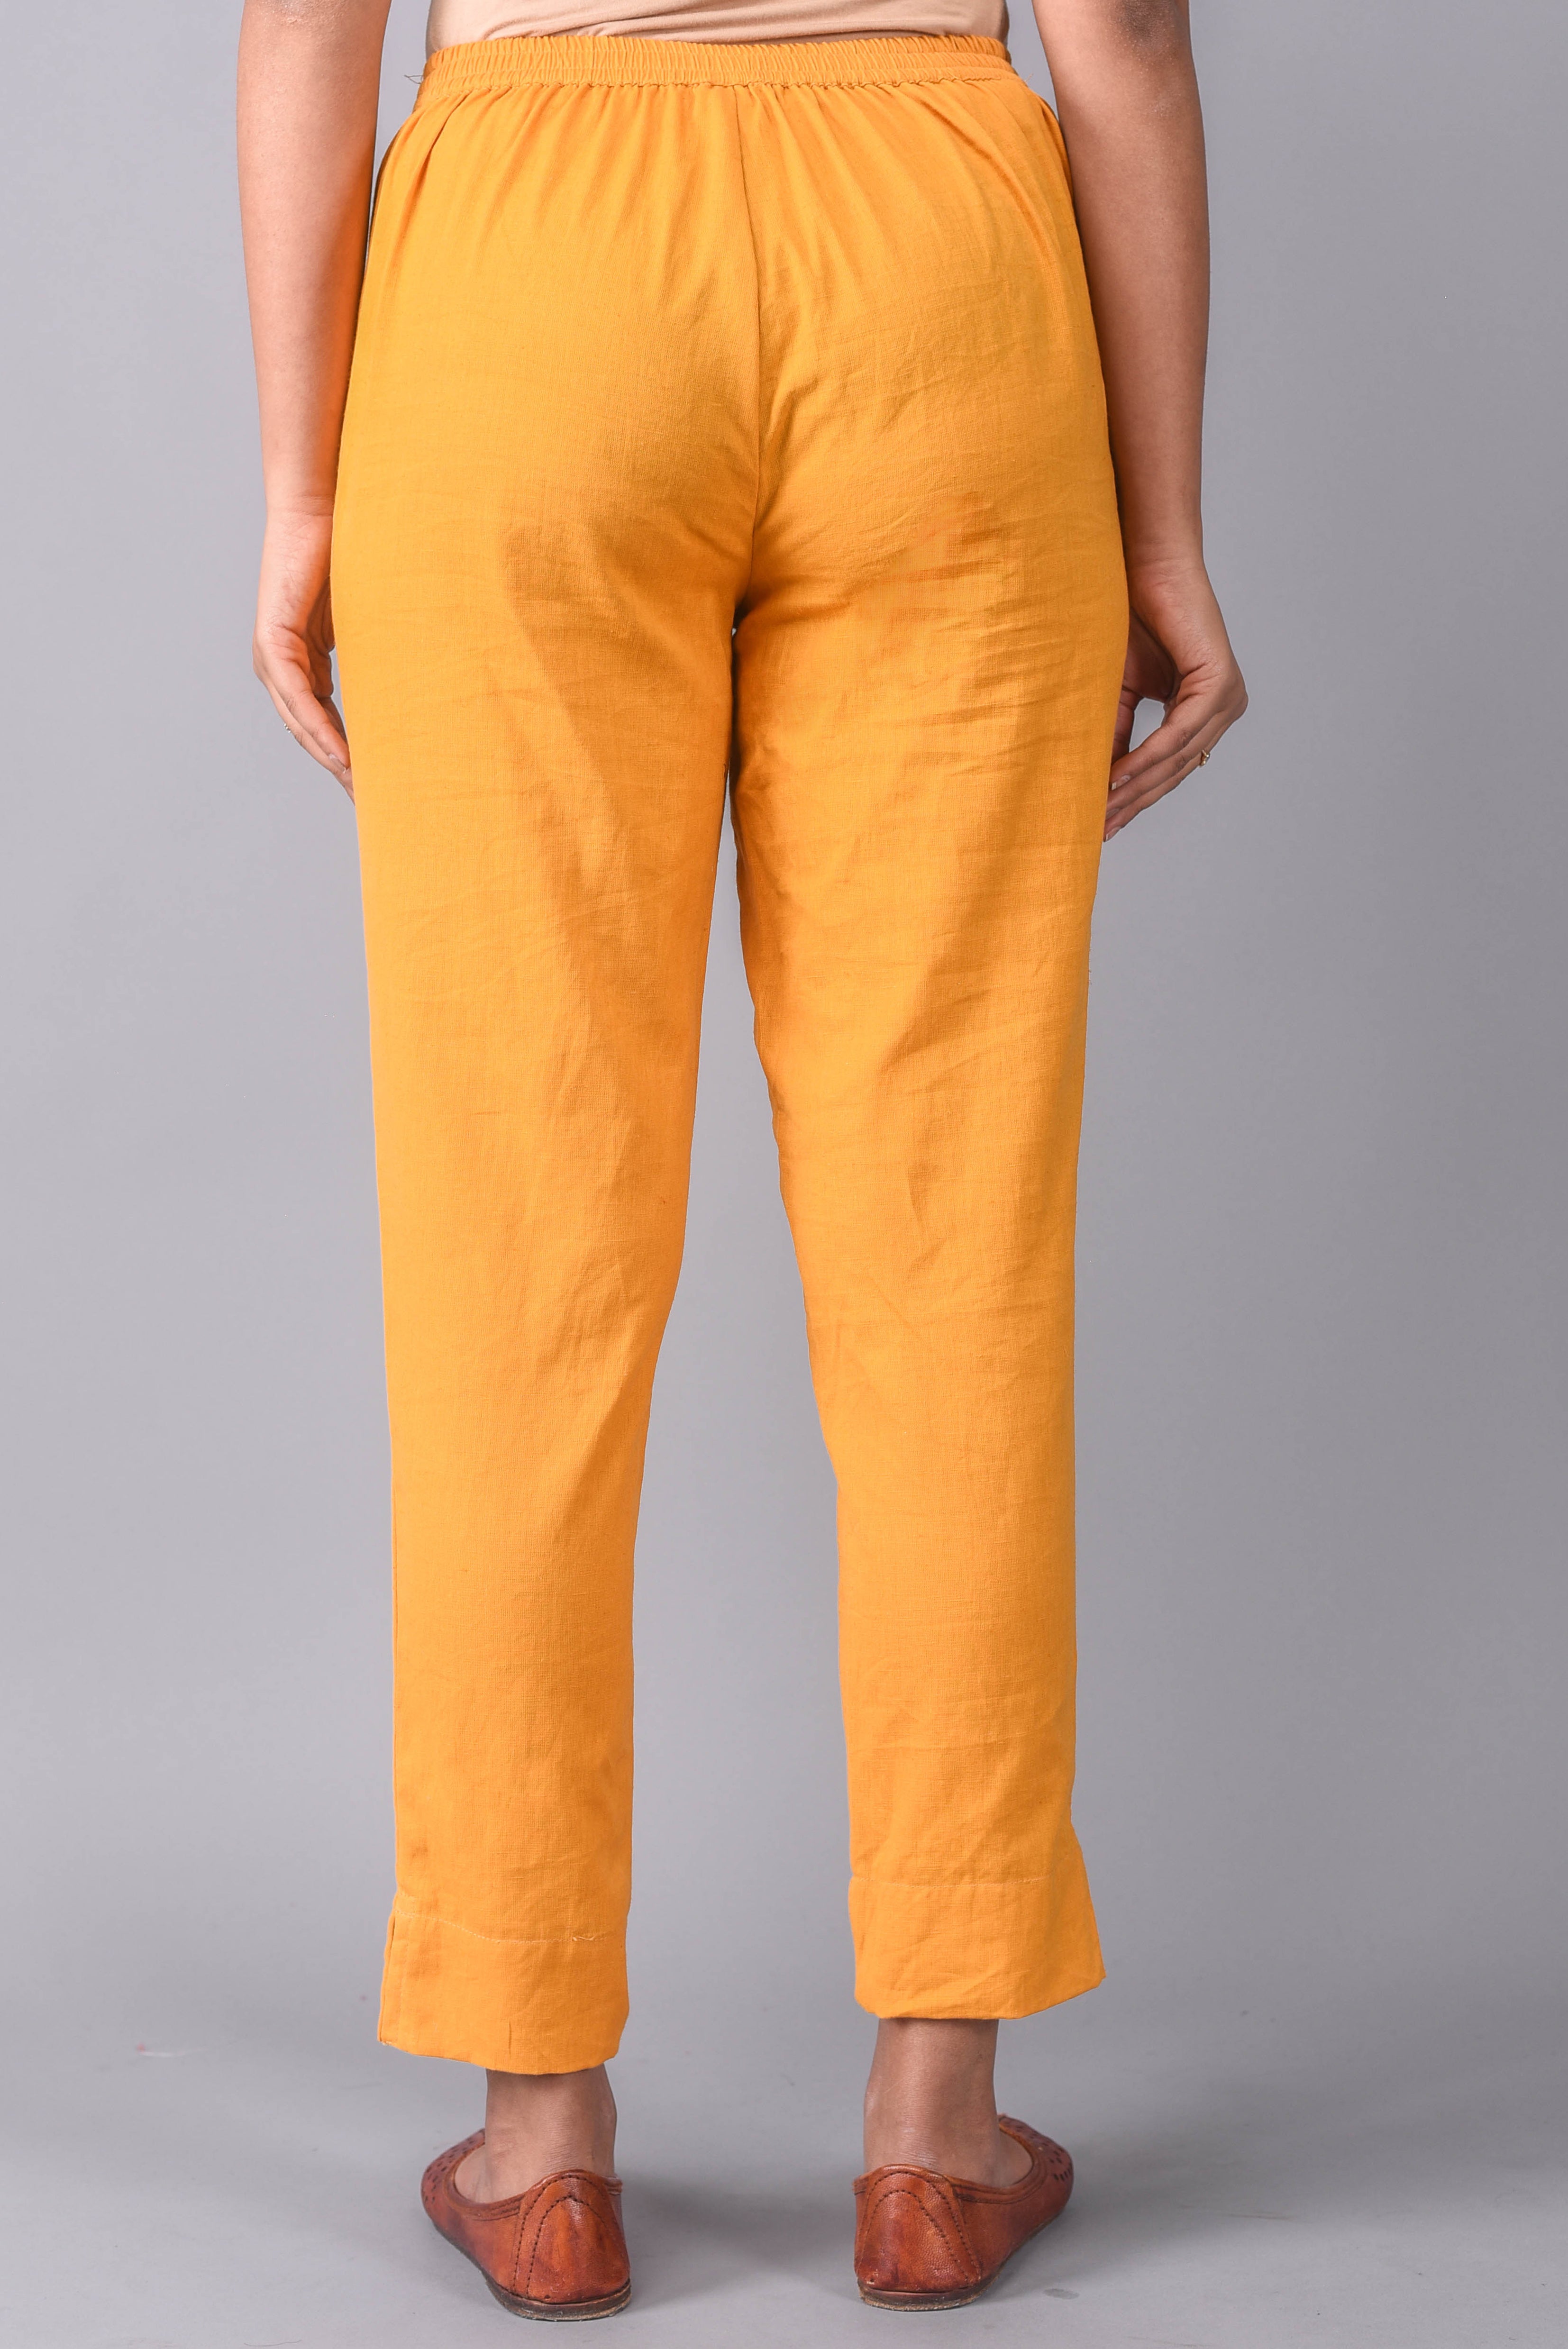 Buy 7STAR NX Solid Cotton Slub Cigarette Pant | Regular Fit Stretchable  Potli Pants/Cigarette/Trousers, Bundi Pants for Women, Girls (36, Mustard)  at Amazon.in